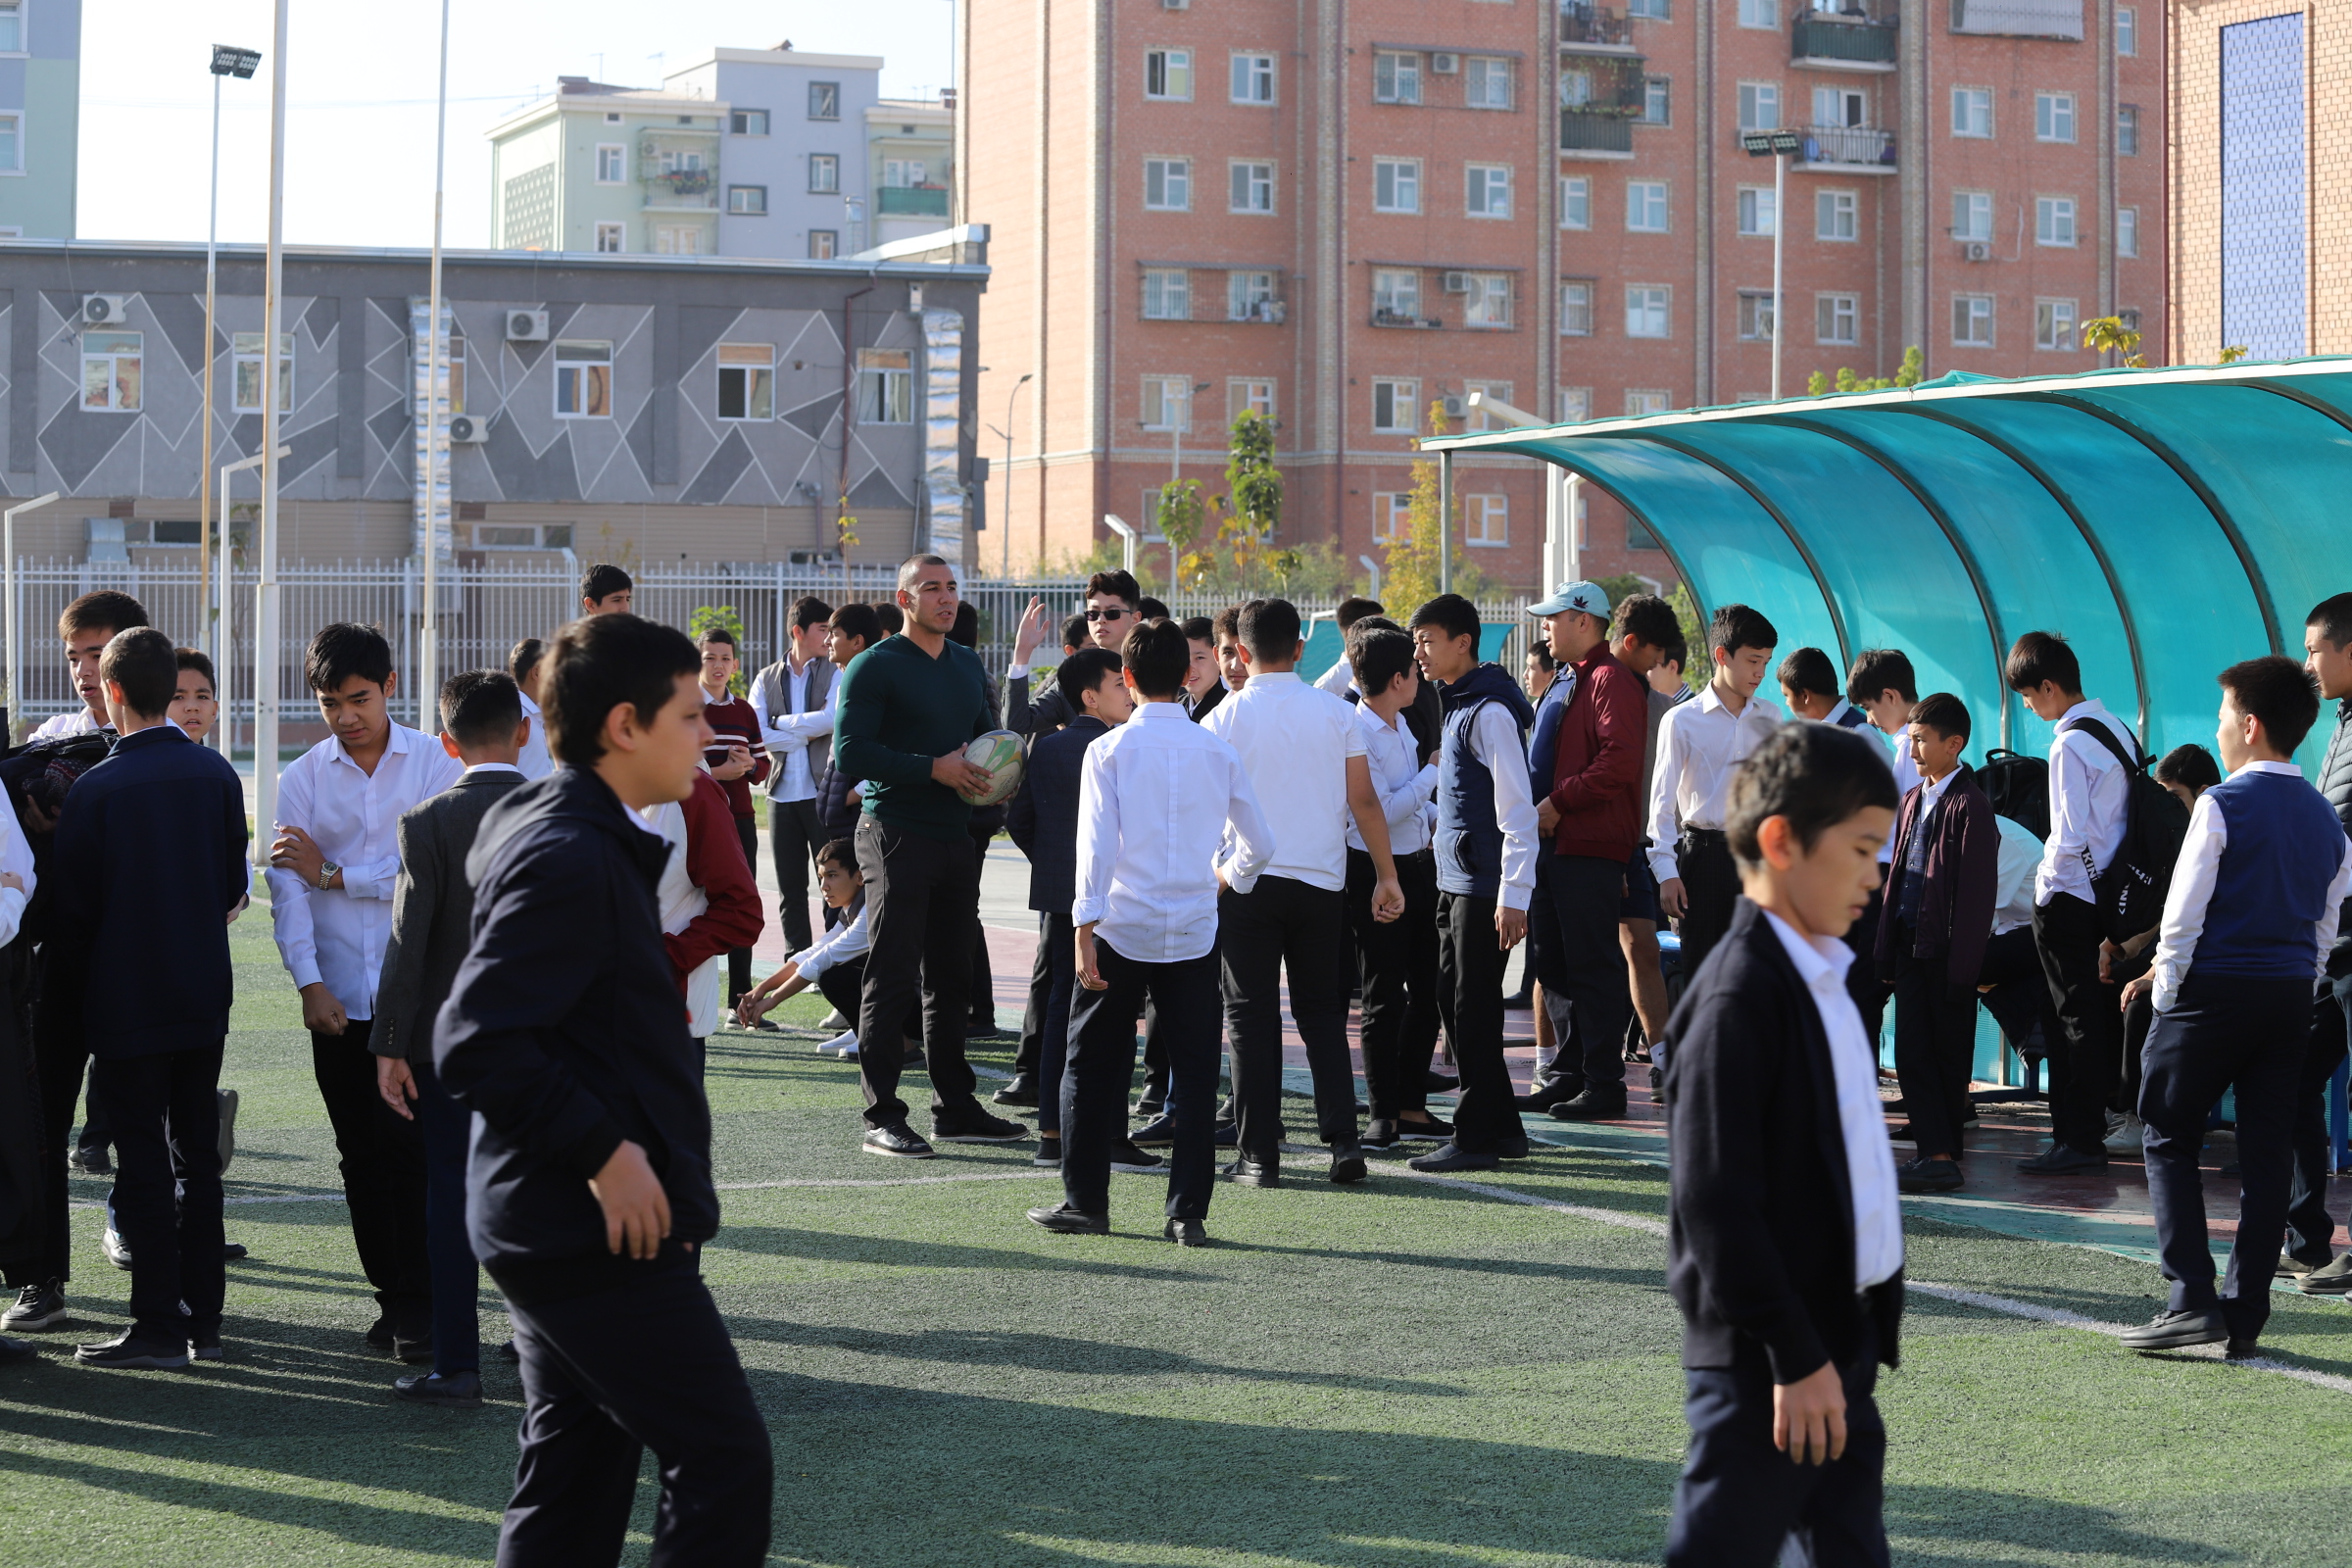 A GIR festival was held at school № 329 in Tashkent